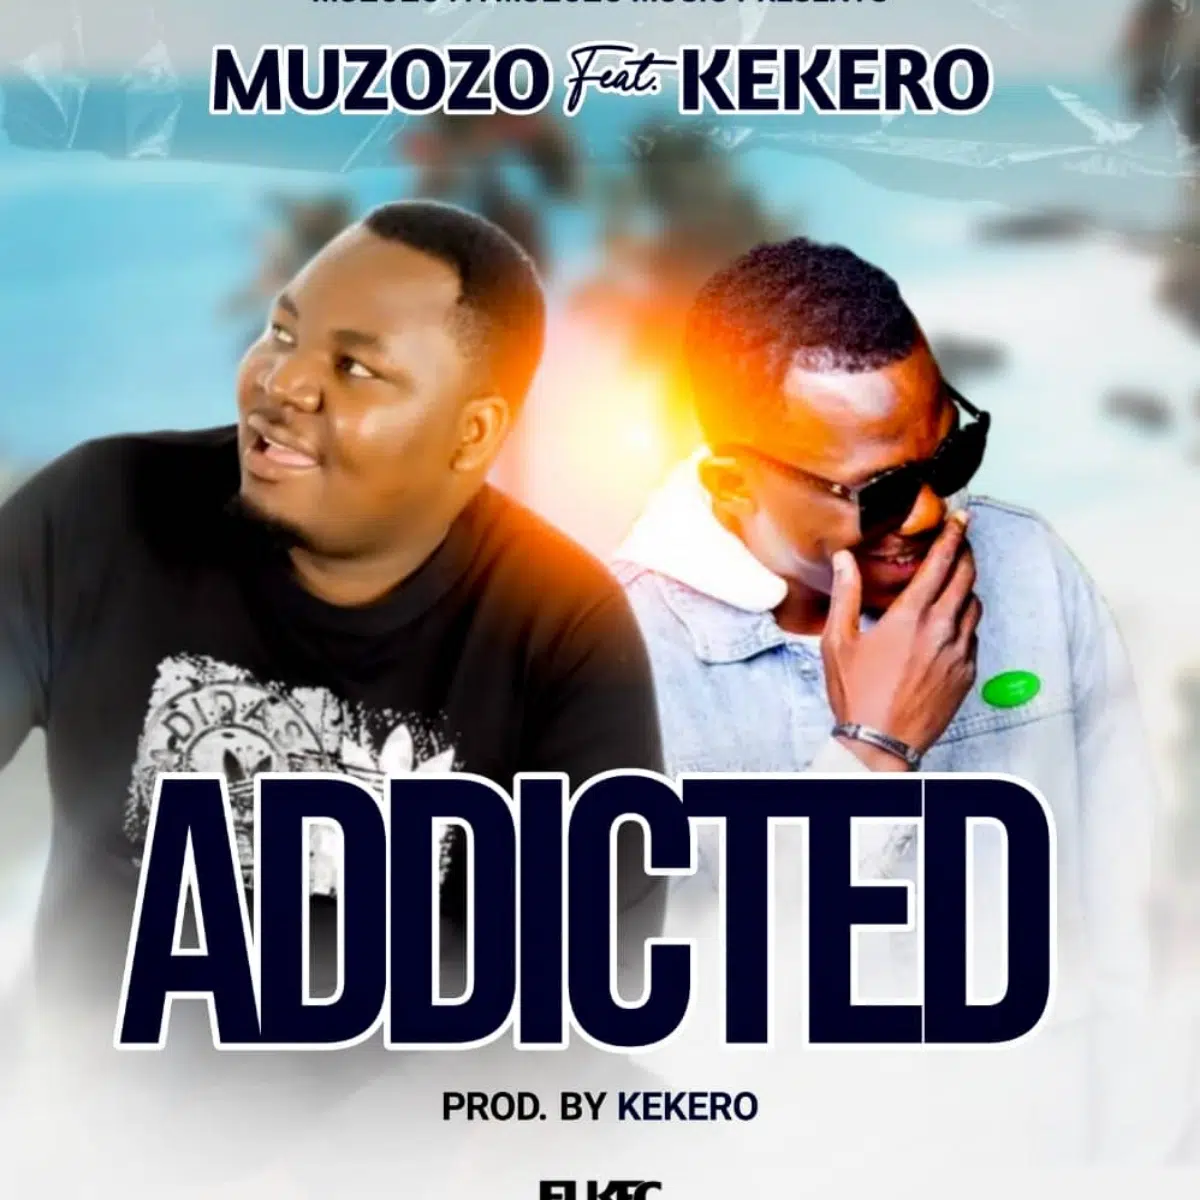 DOWNLOAD: Muzozo Ft Kekero – “Addicted” Mp3